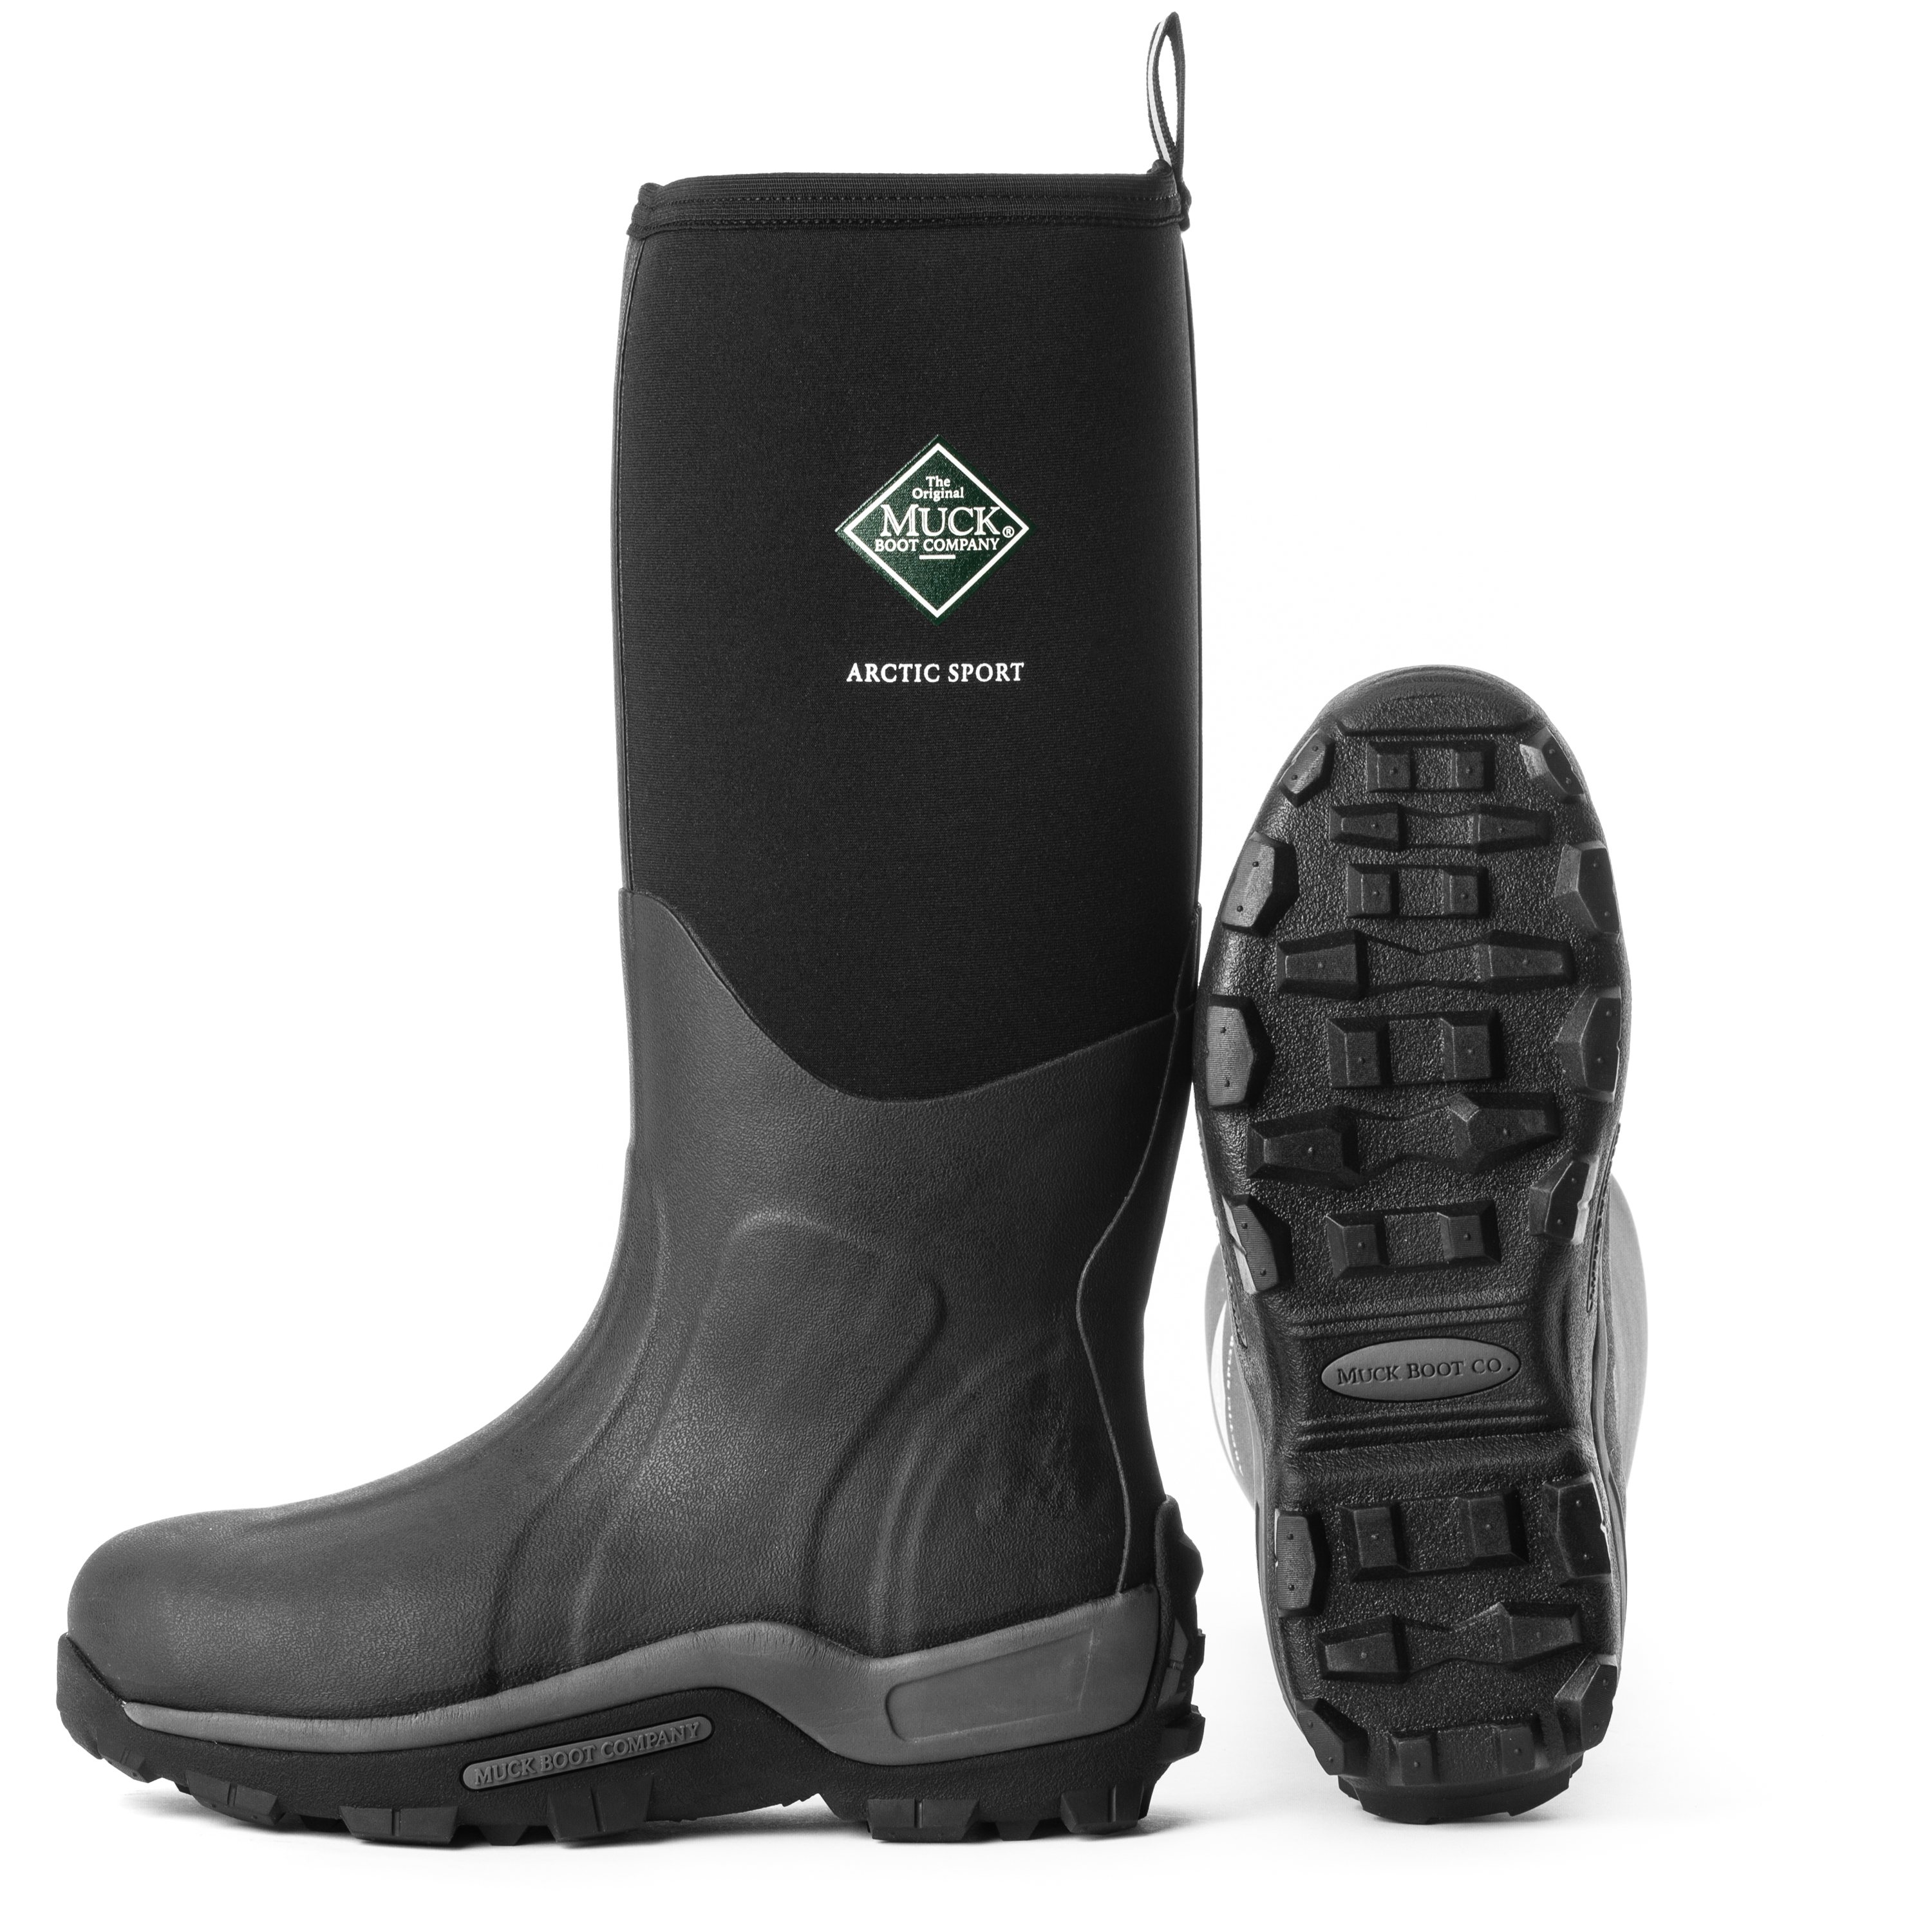 MUCK BOOT ARCTIC SPORT RUBBER BOOTS HIGH BLACK - Rubber boots